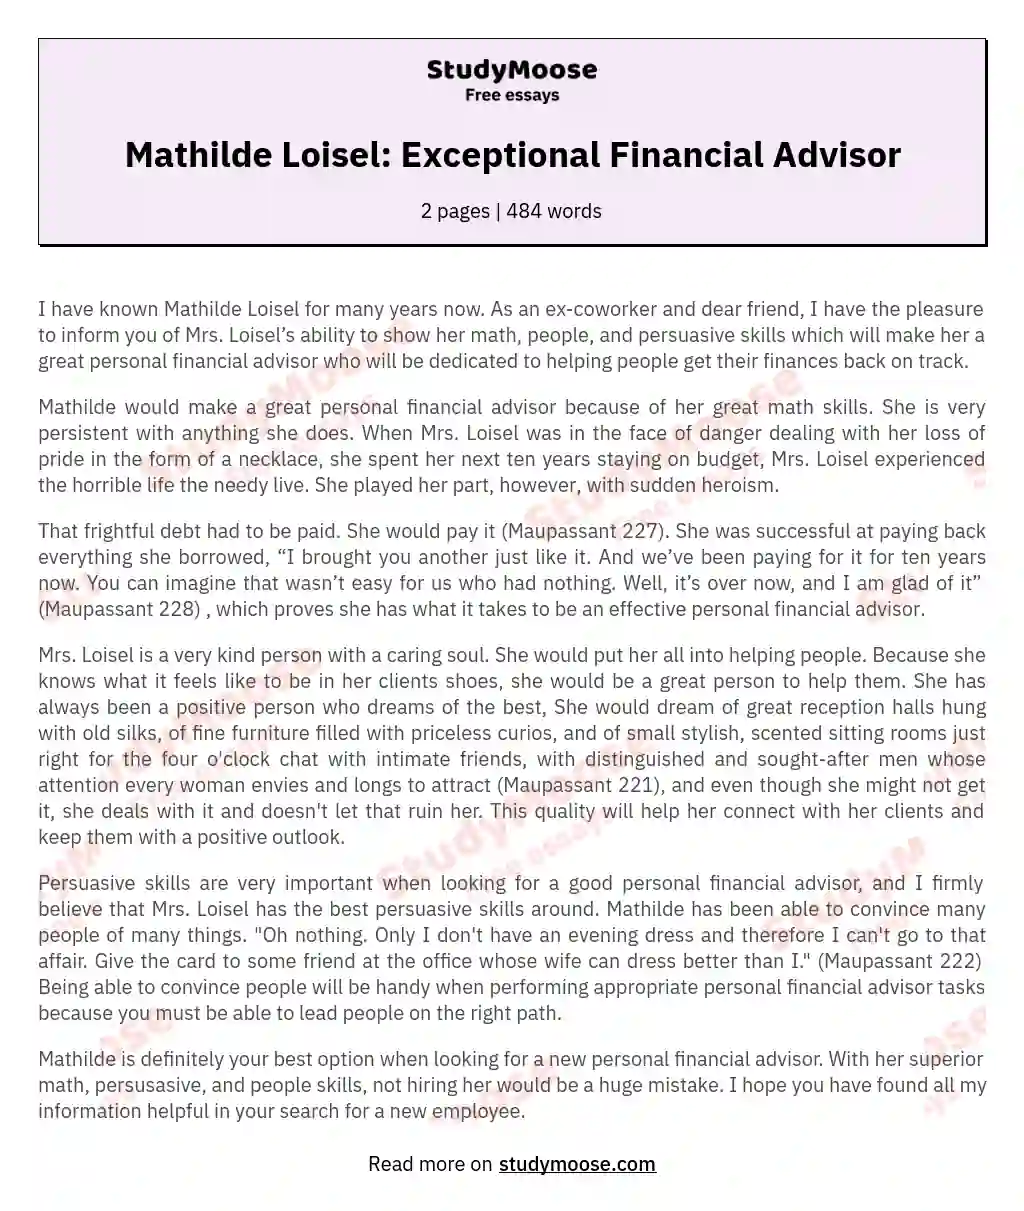 Mathilde Loisel: Exceptional Financial Advisor essay